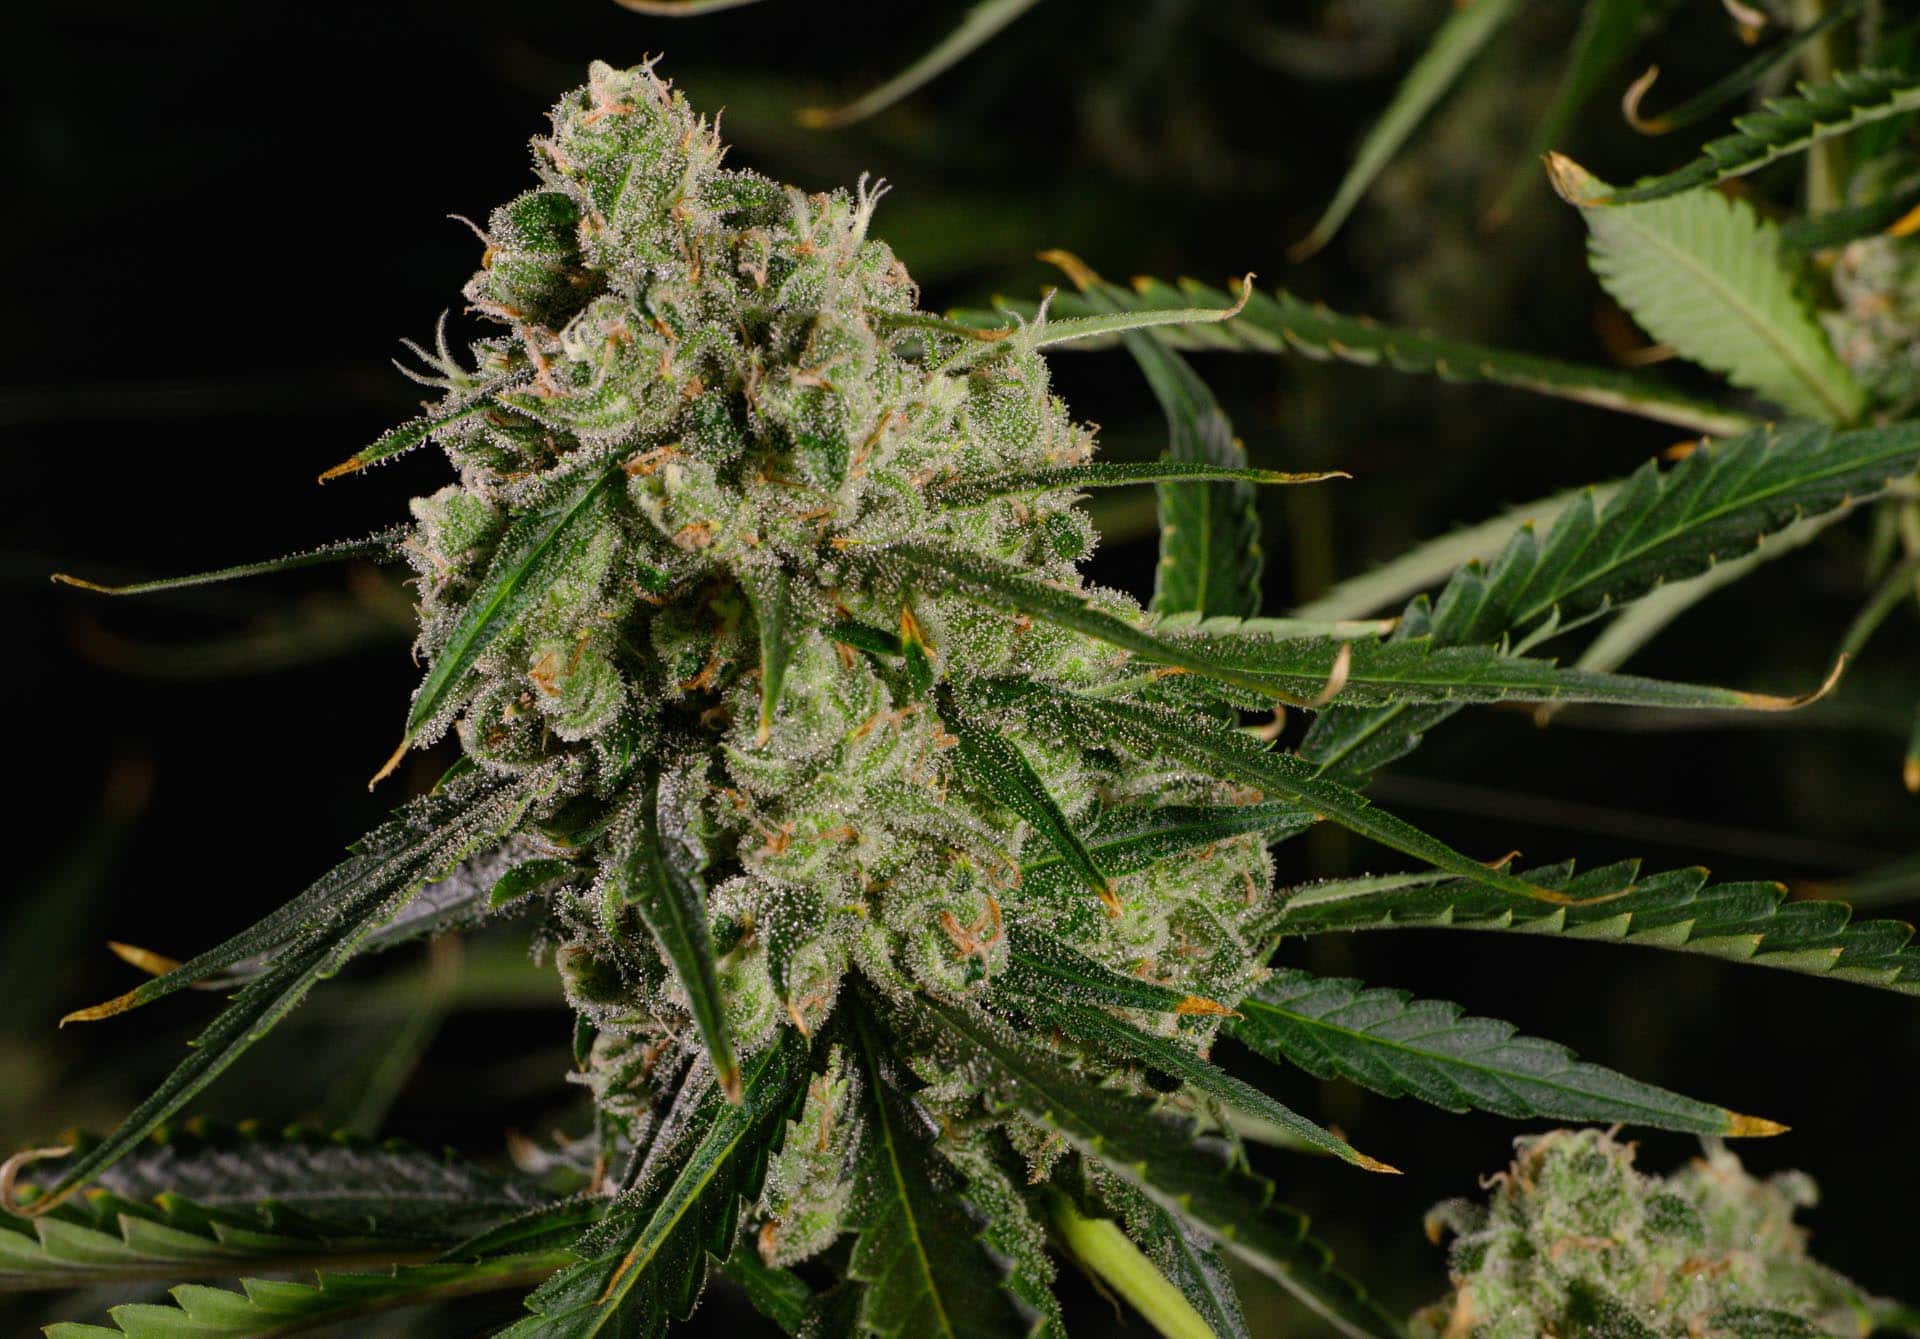 Jack Herer strain from Rythm Cannabis